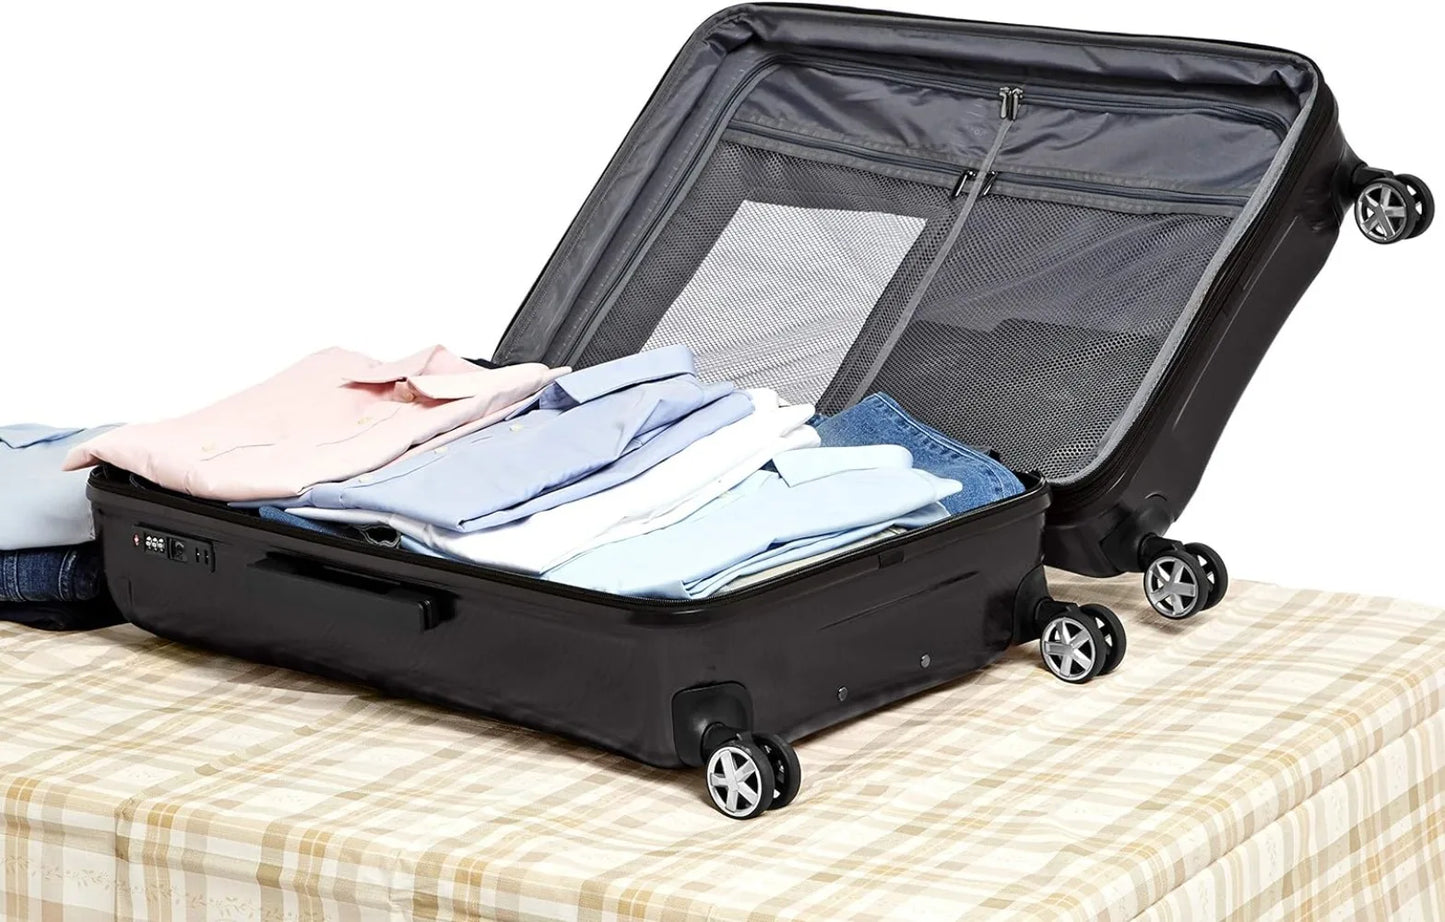 Basics Oxford Expandable Spinner Luggage Suitcase with TSA Lock - 28 Inch